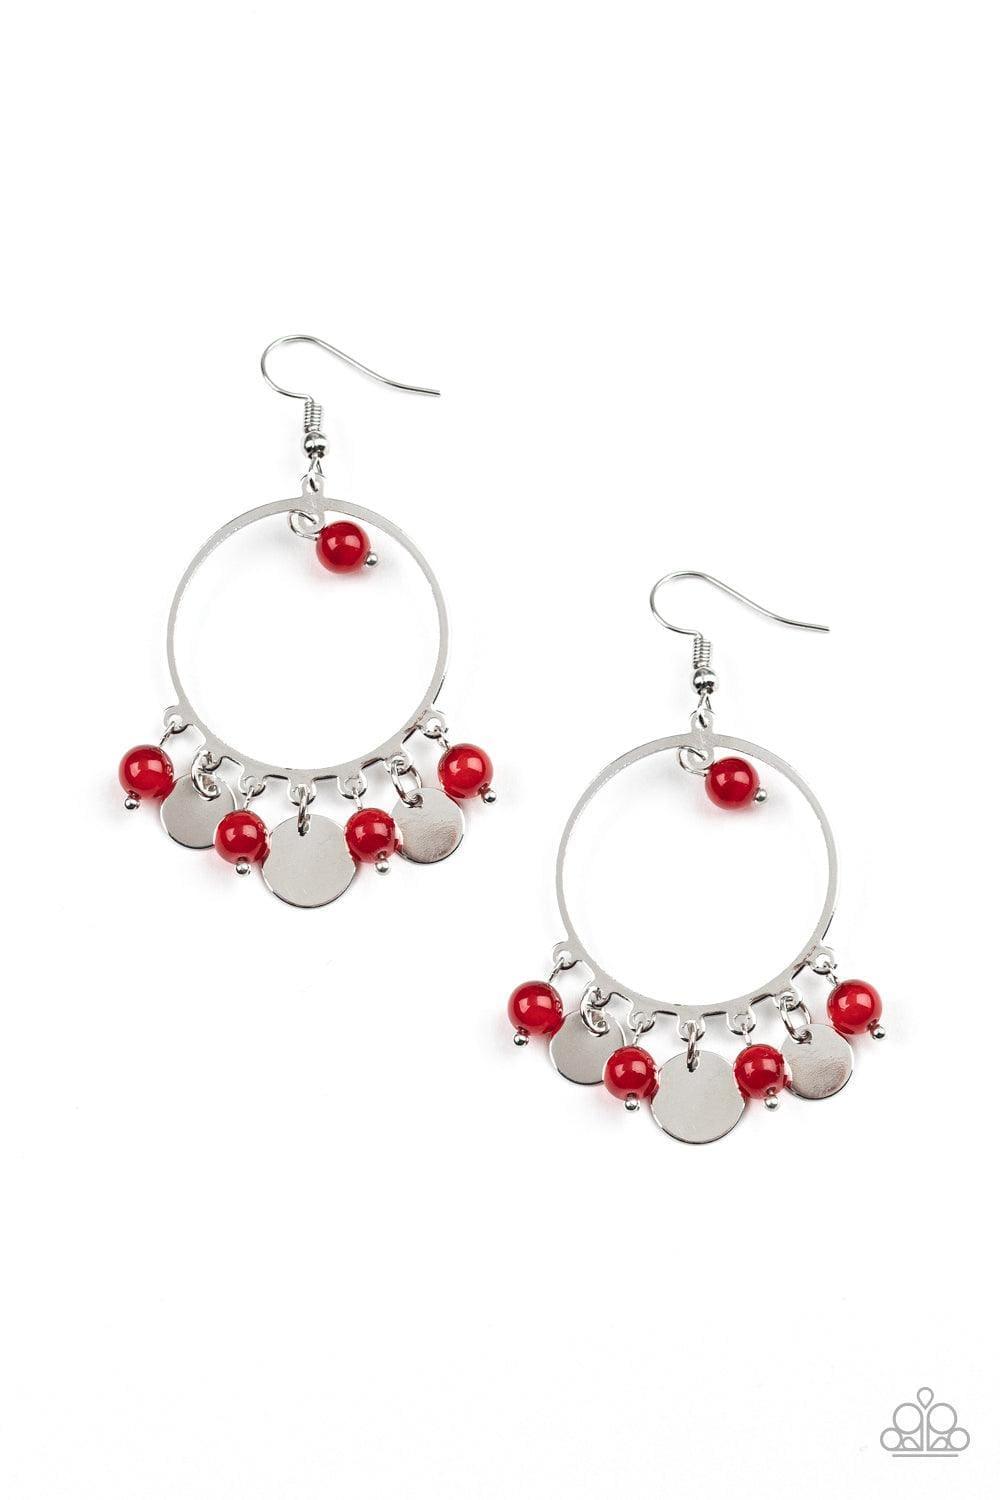 Paparazzi Accessories - Bubbly Buoyancy - Red Earrings - Bling by JessieK